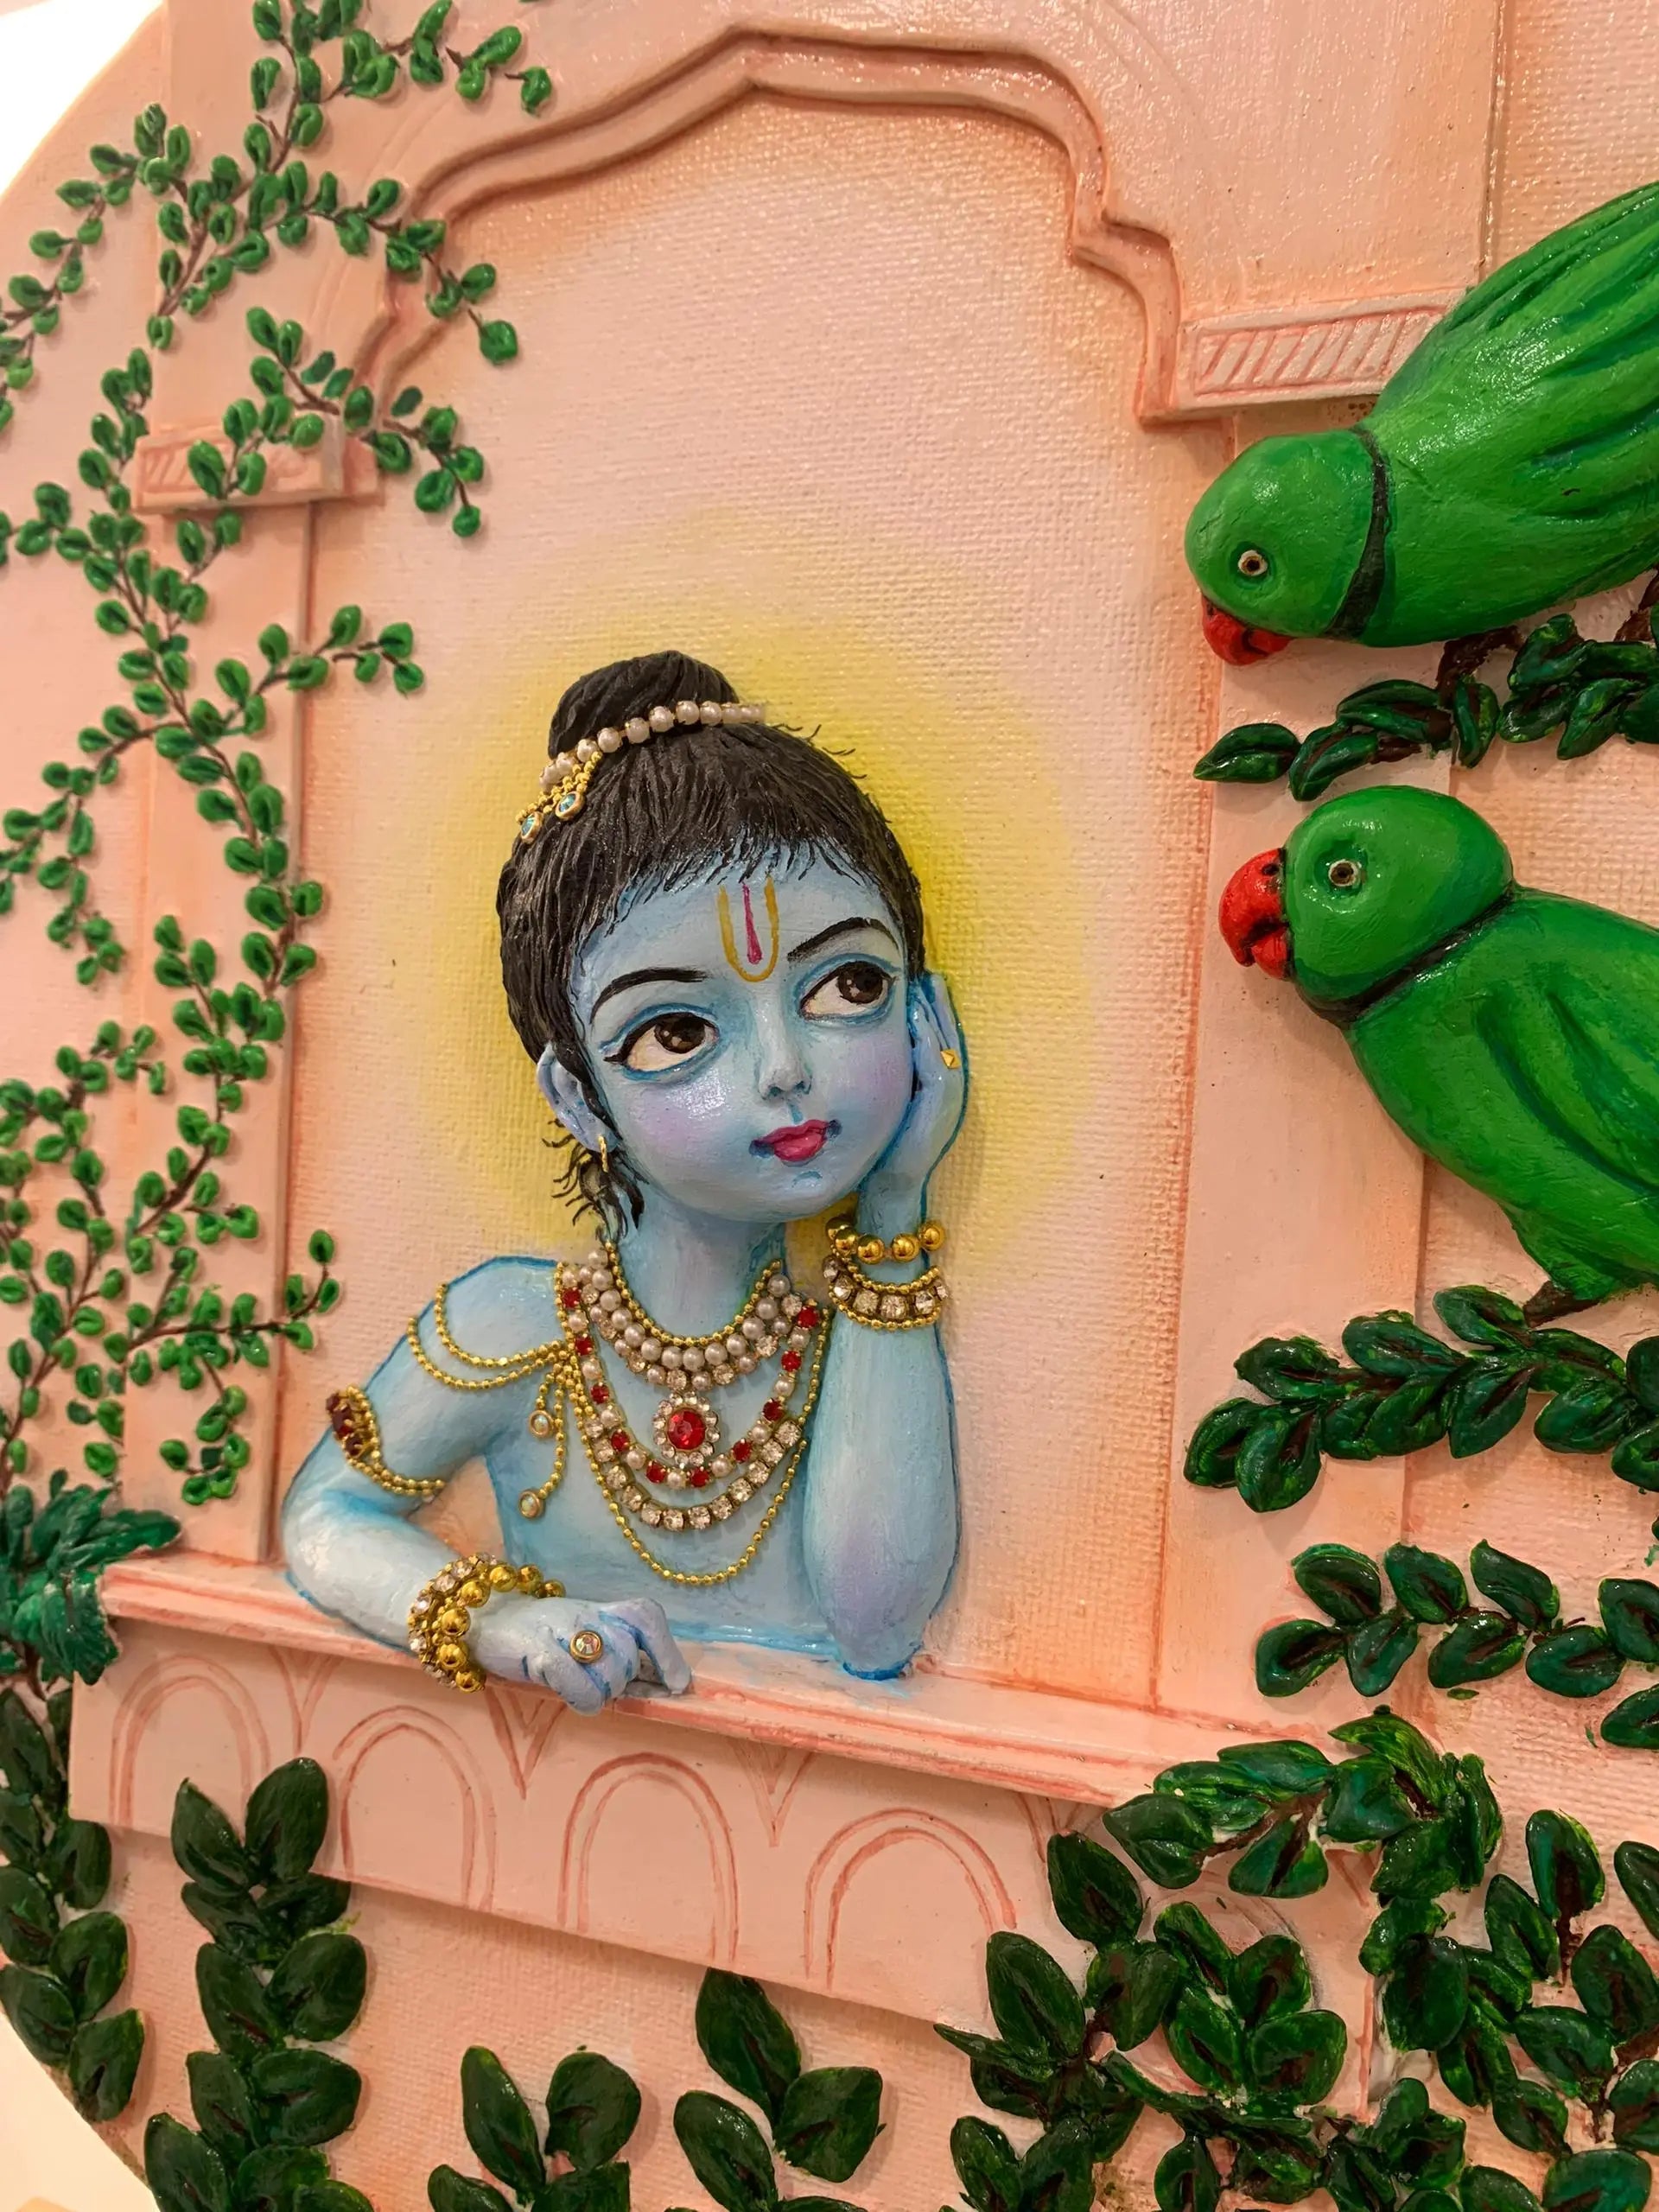 Krishna with Parrots - Image #2